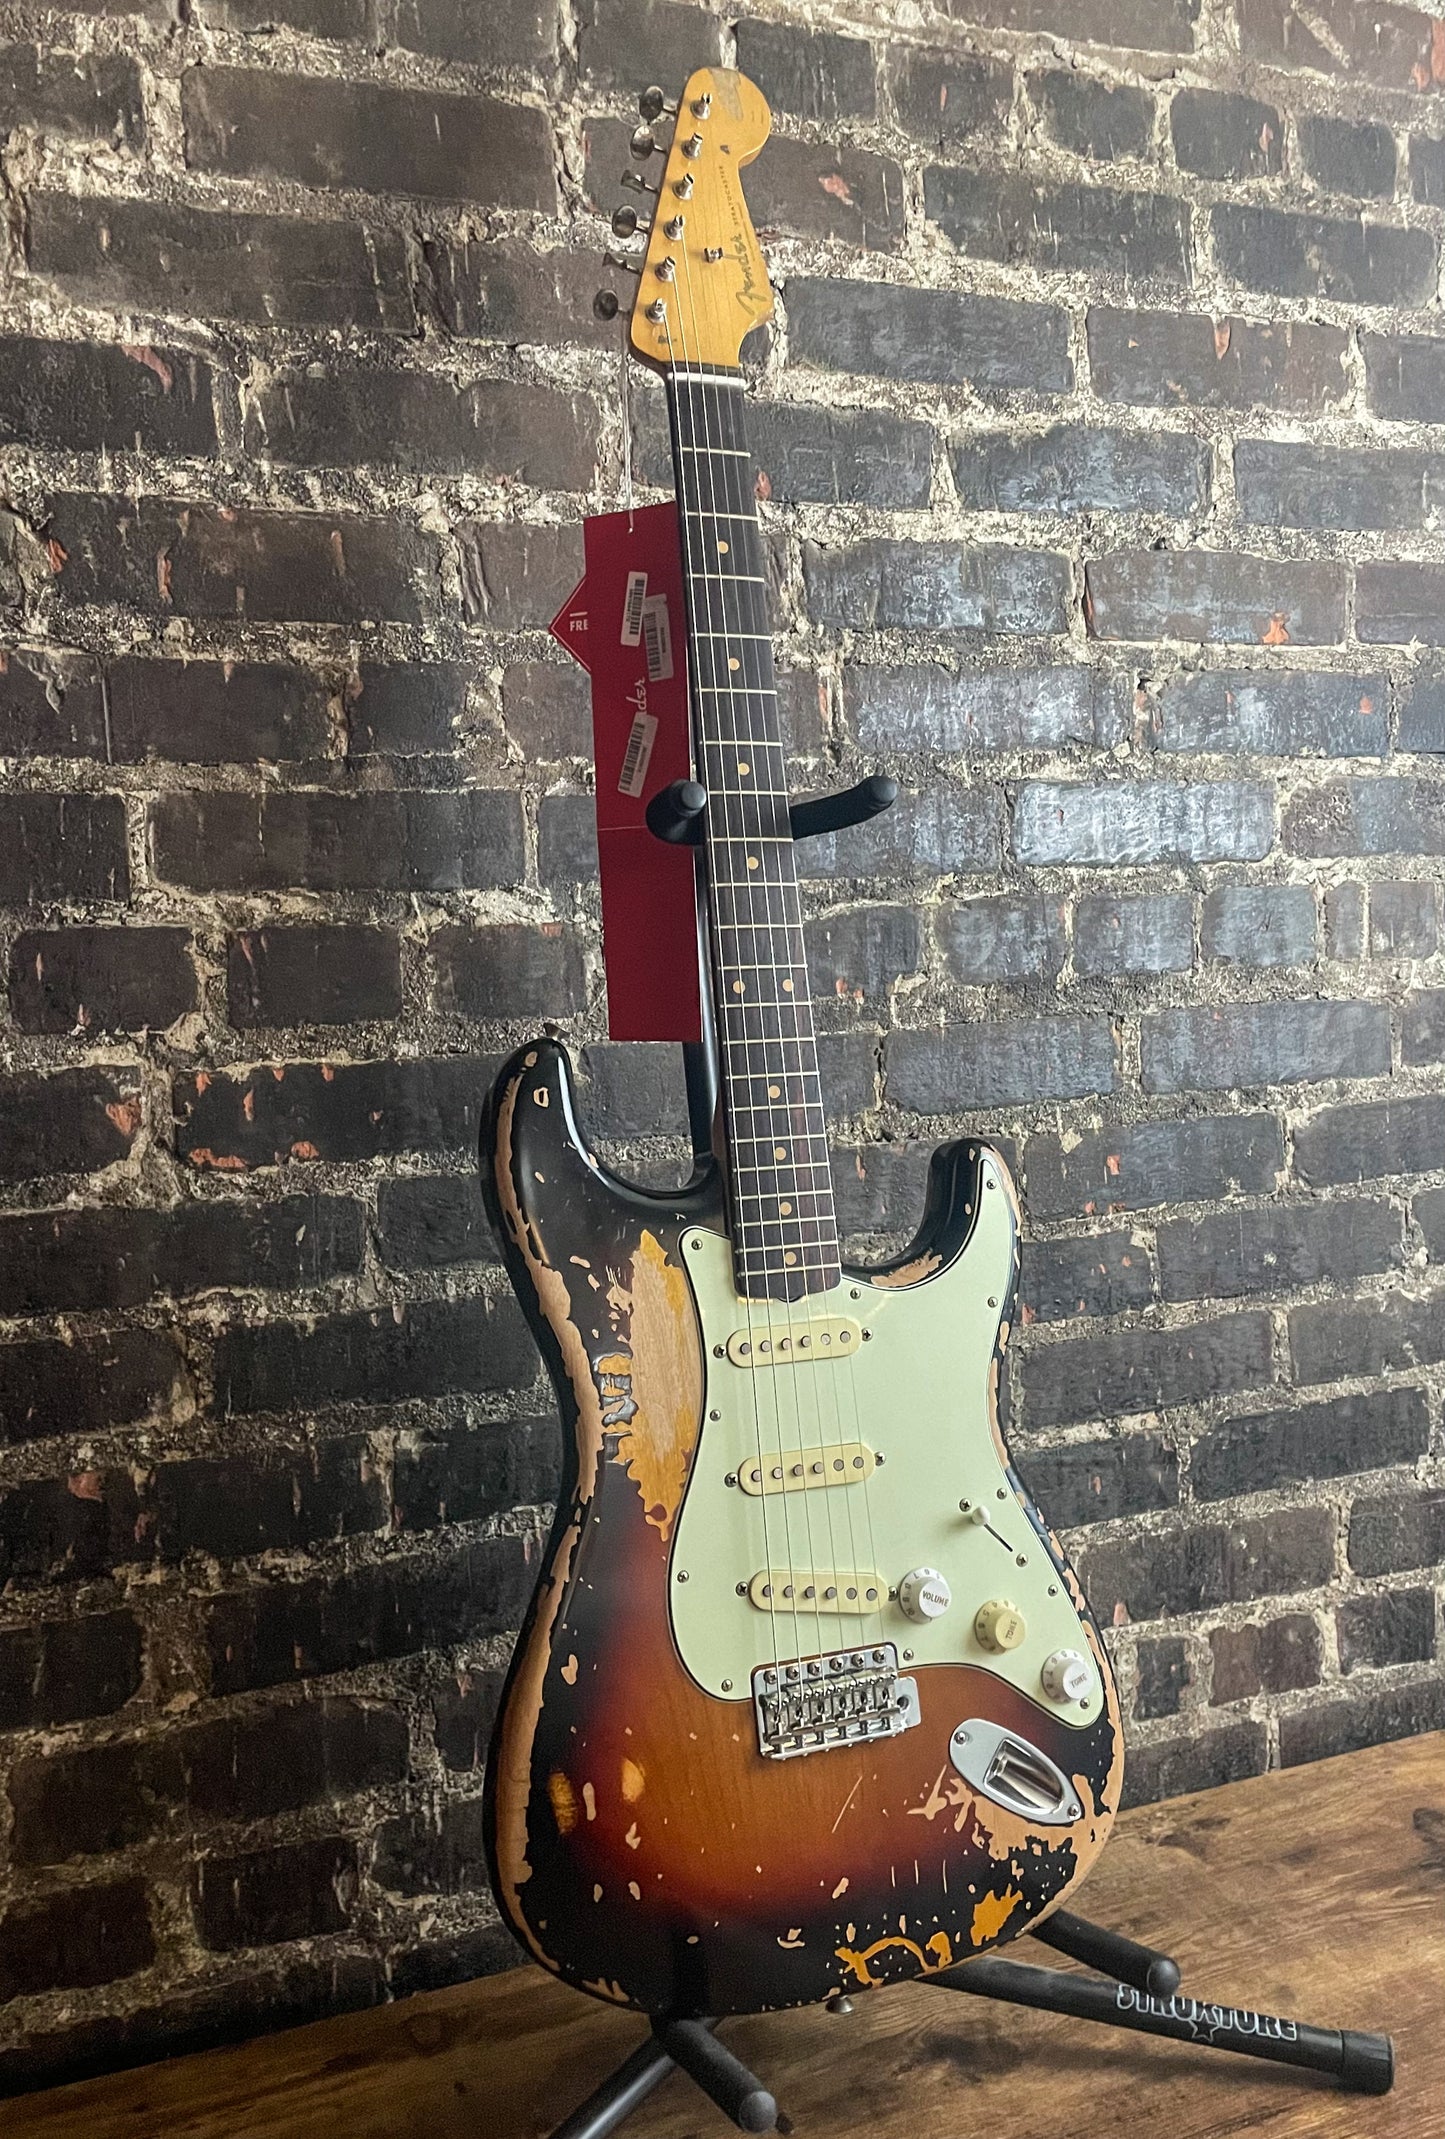 Fender Mike McCready Stratocaster Electric Guitar - 3-color Sunburst